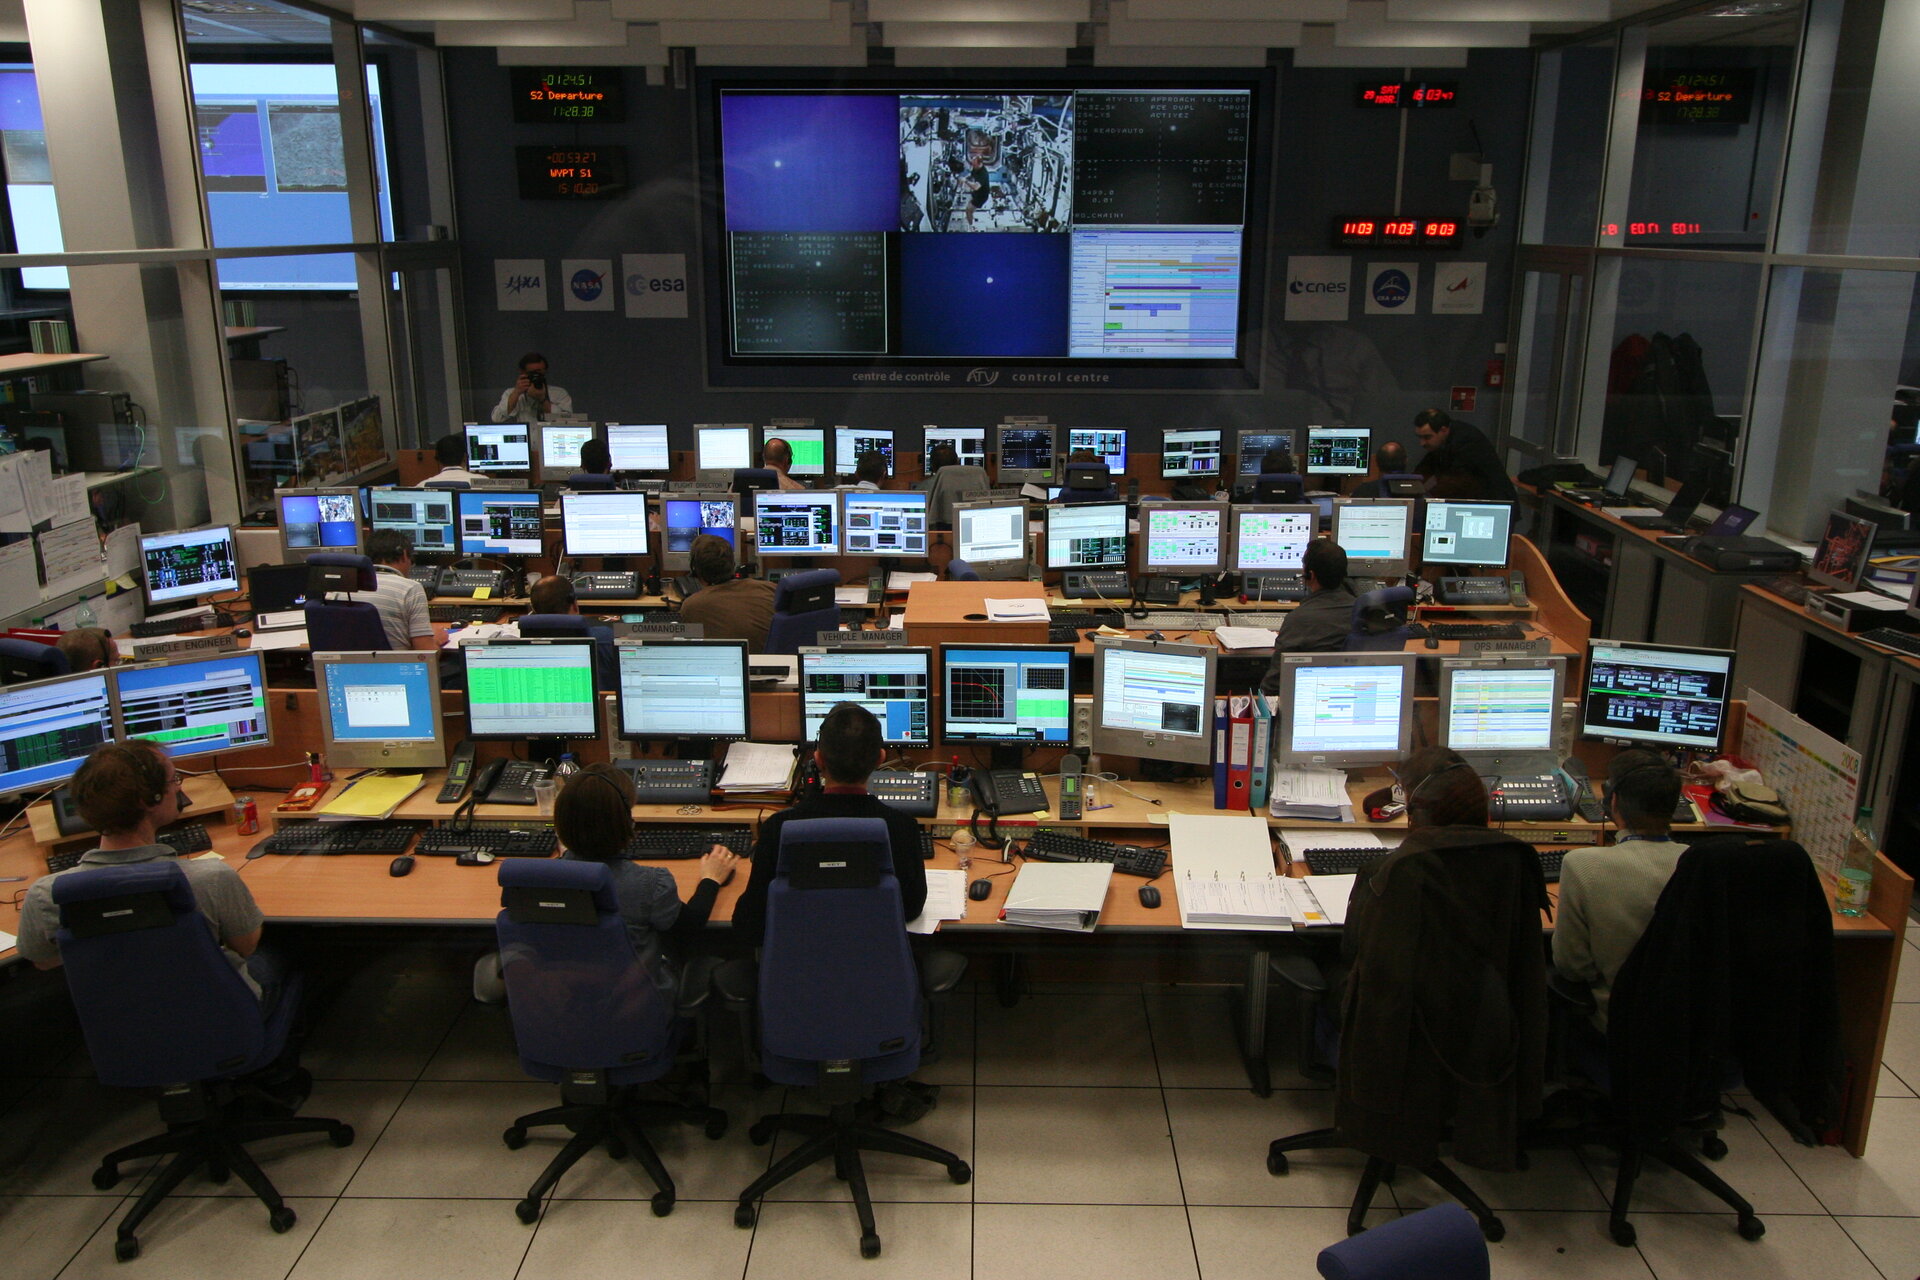 The Escape command was sent from the ATV Control Centre